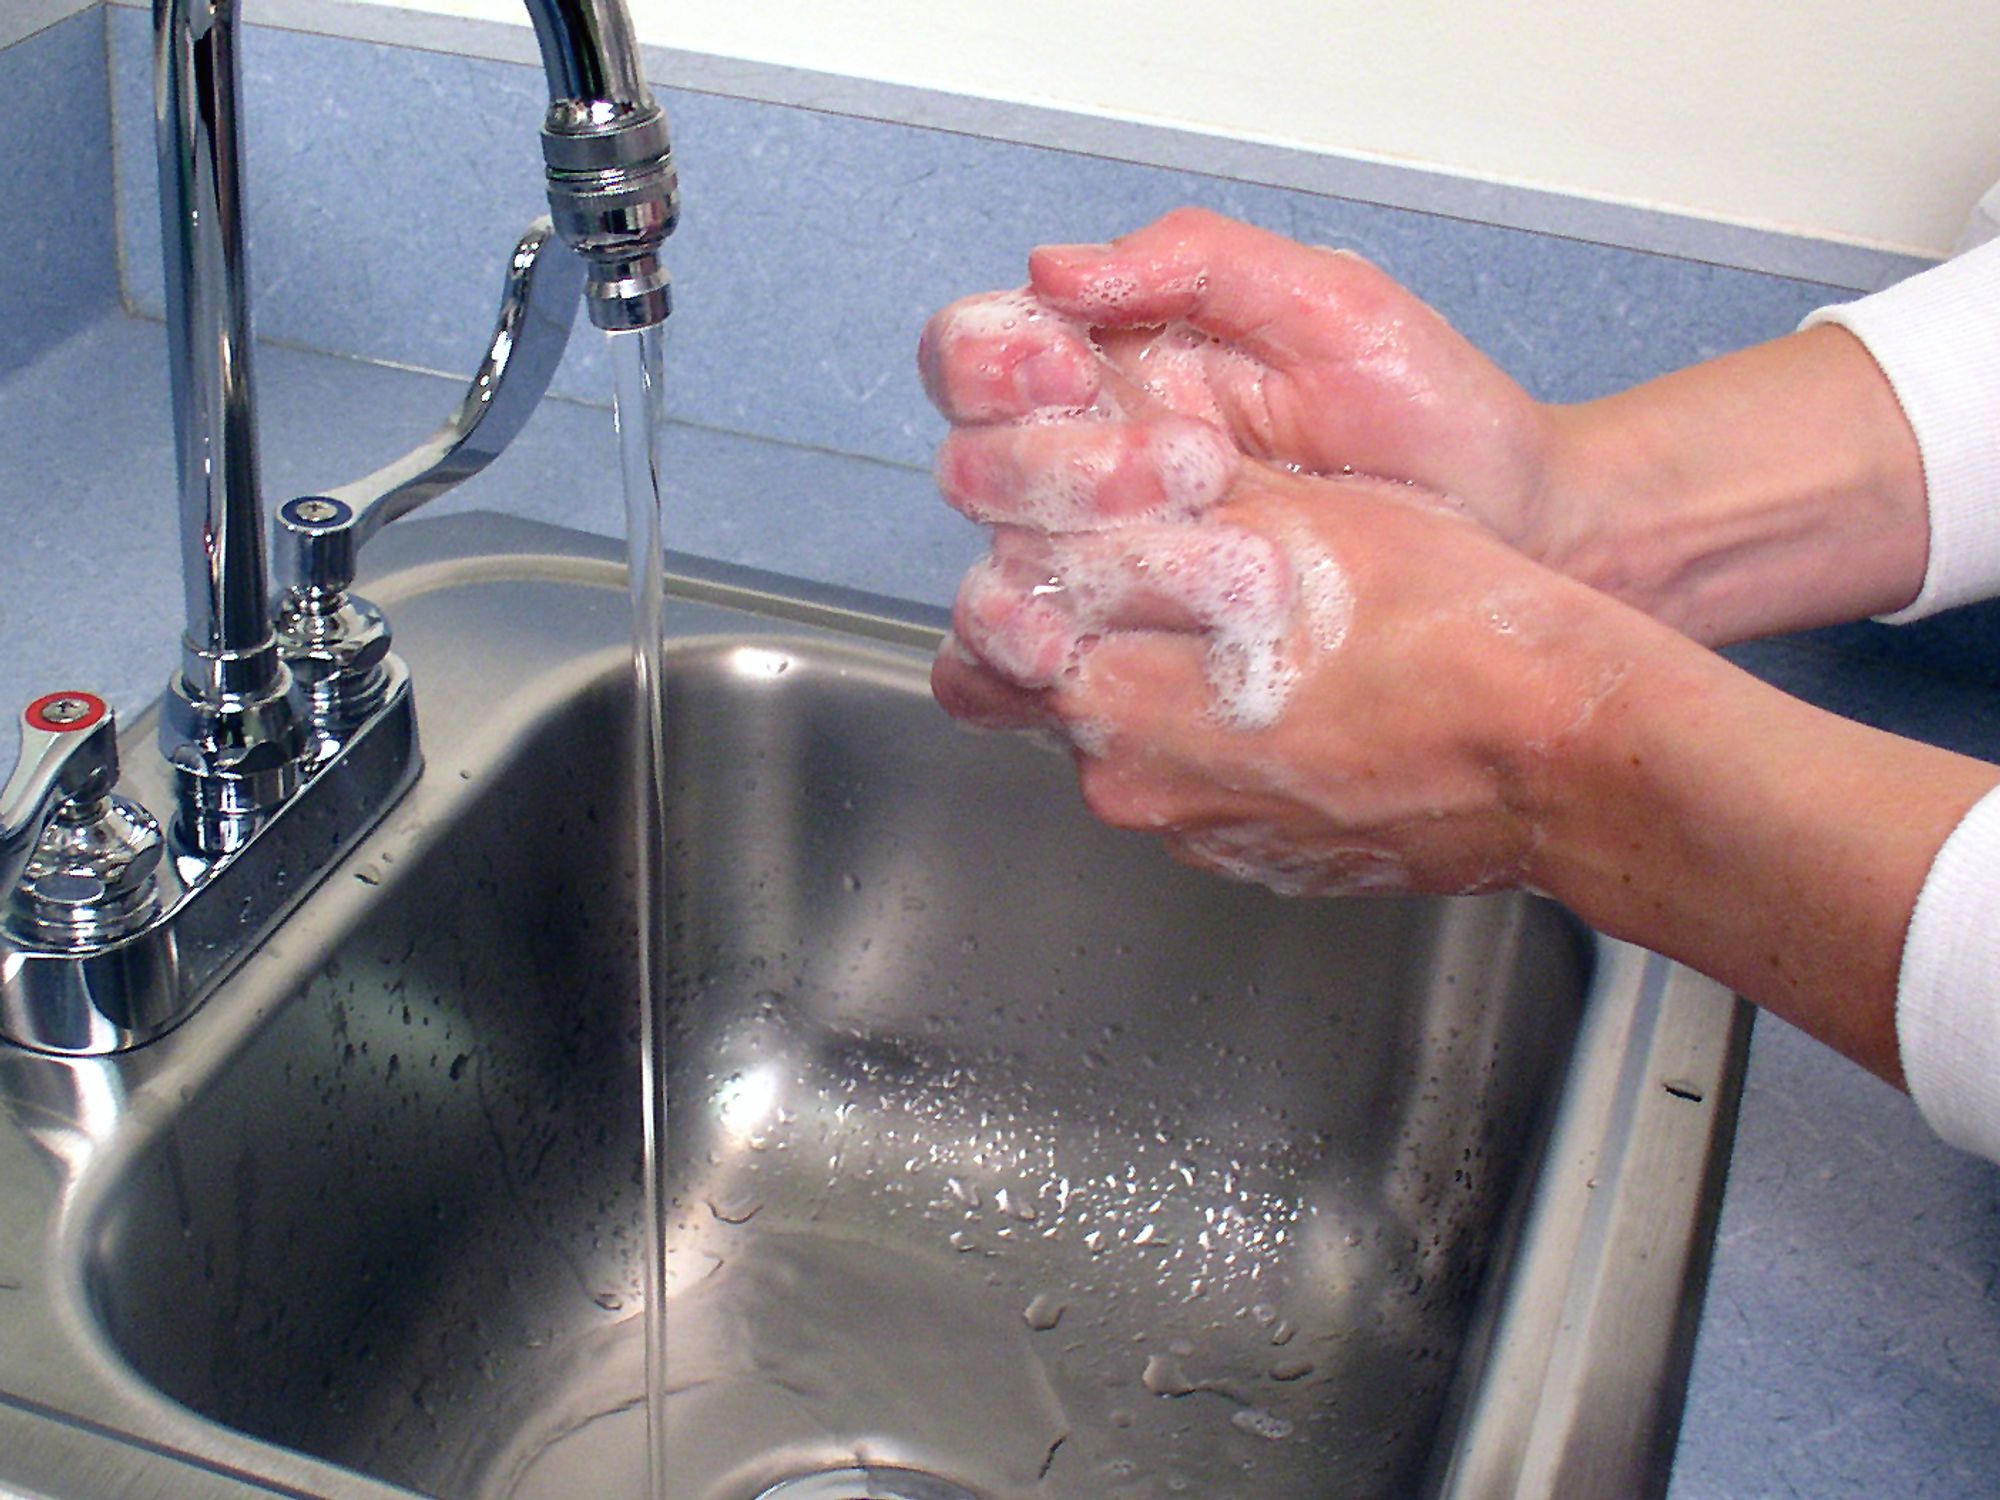 Handwashing facilities